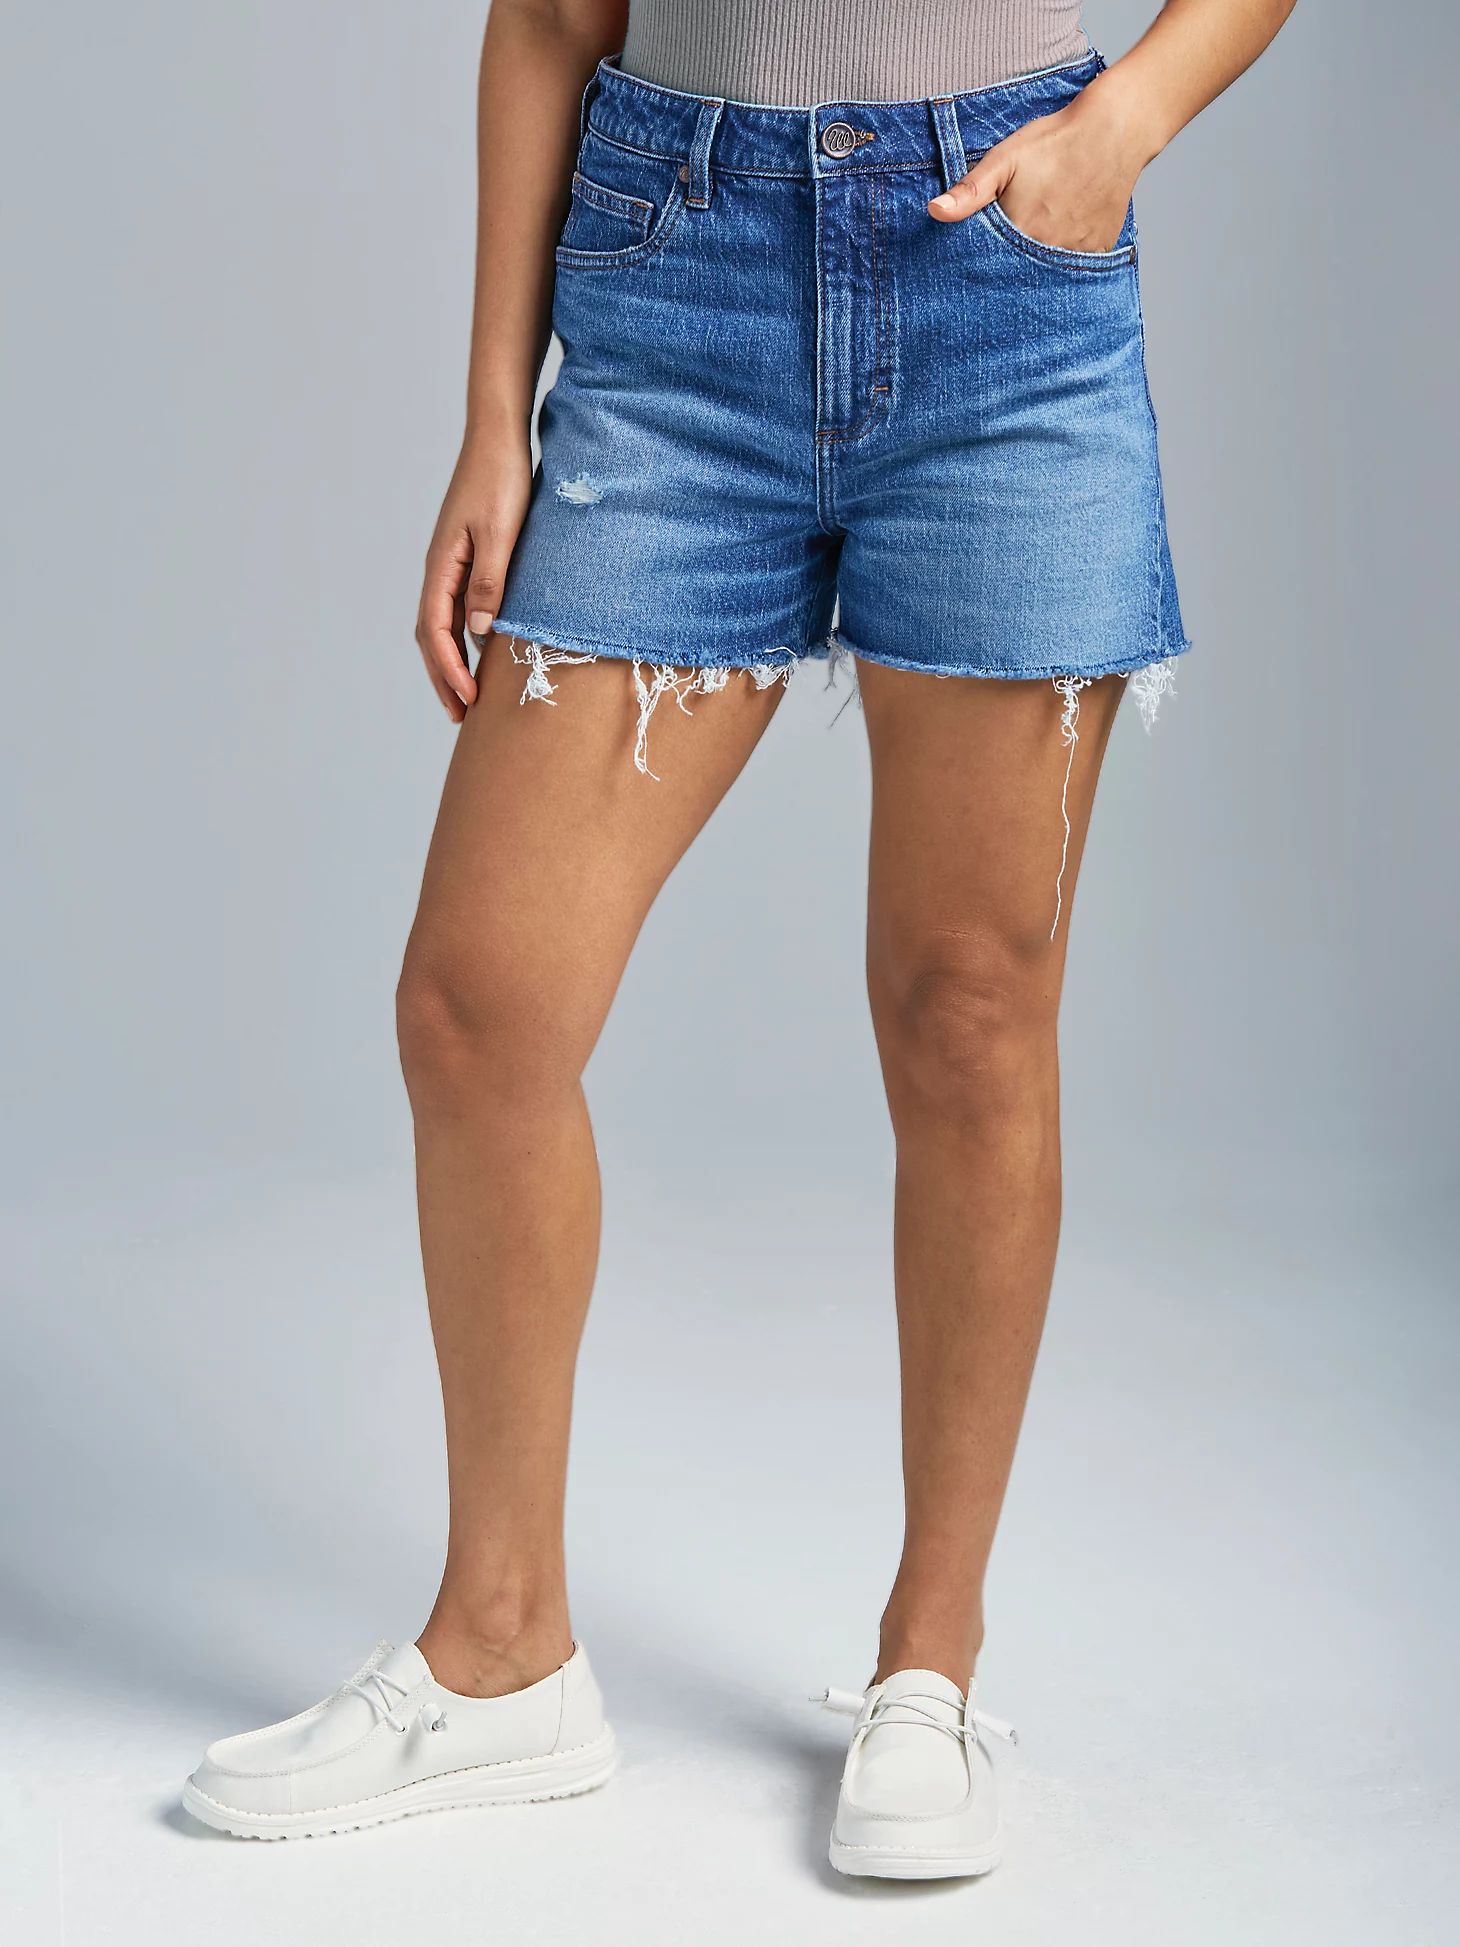 Women's Wrangler Retro® Bailey High Rise Cut-Off Shorts in Samantha | Wrangler